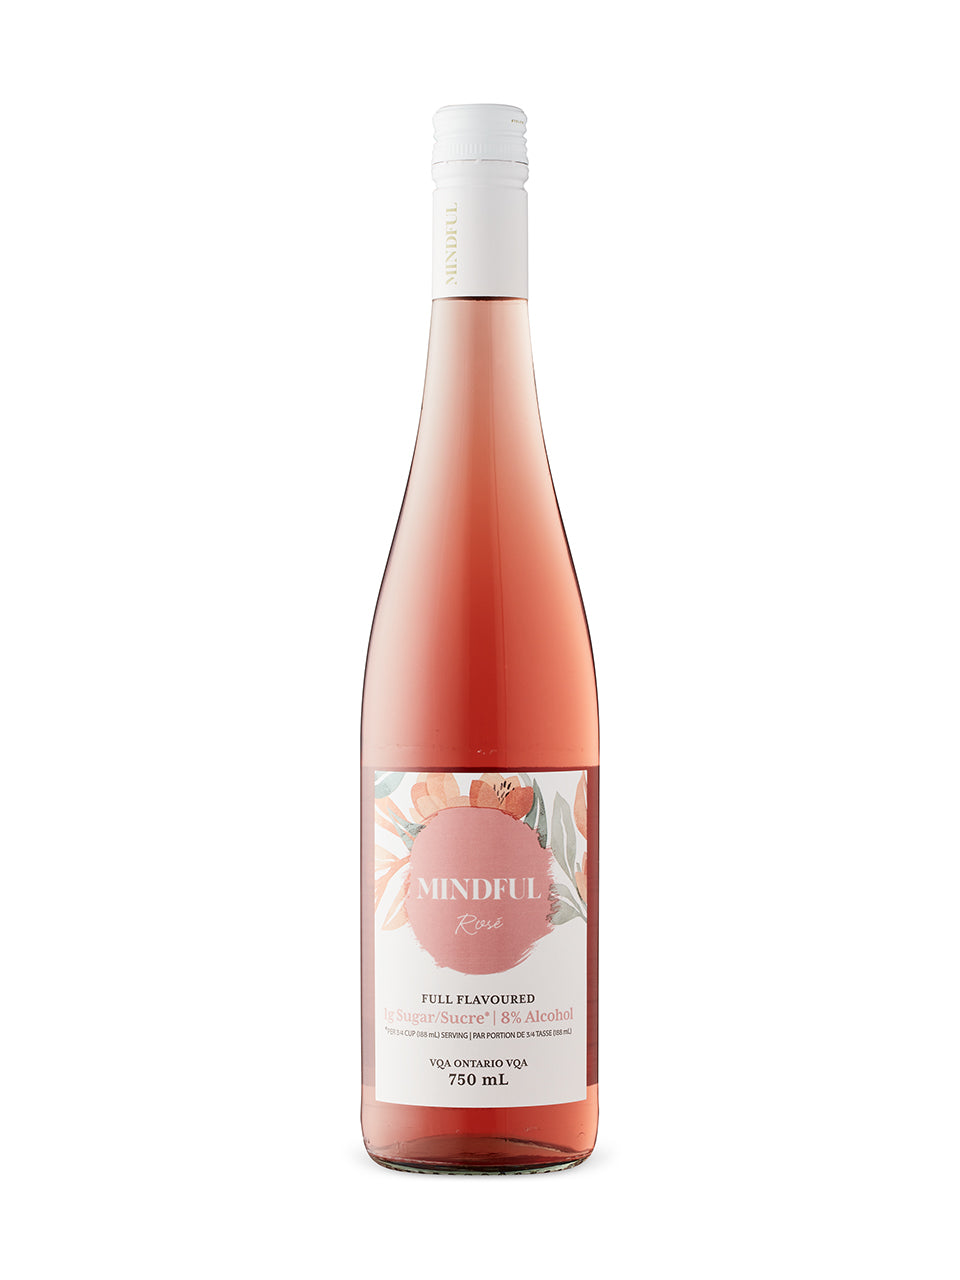 Mindful Rosé VQA 750 ml bottle